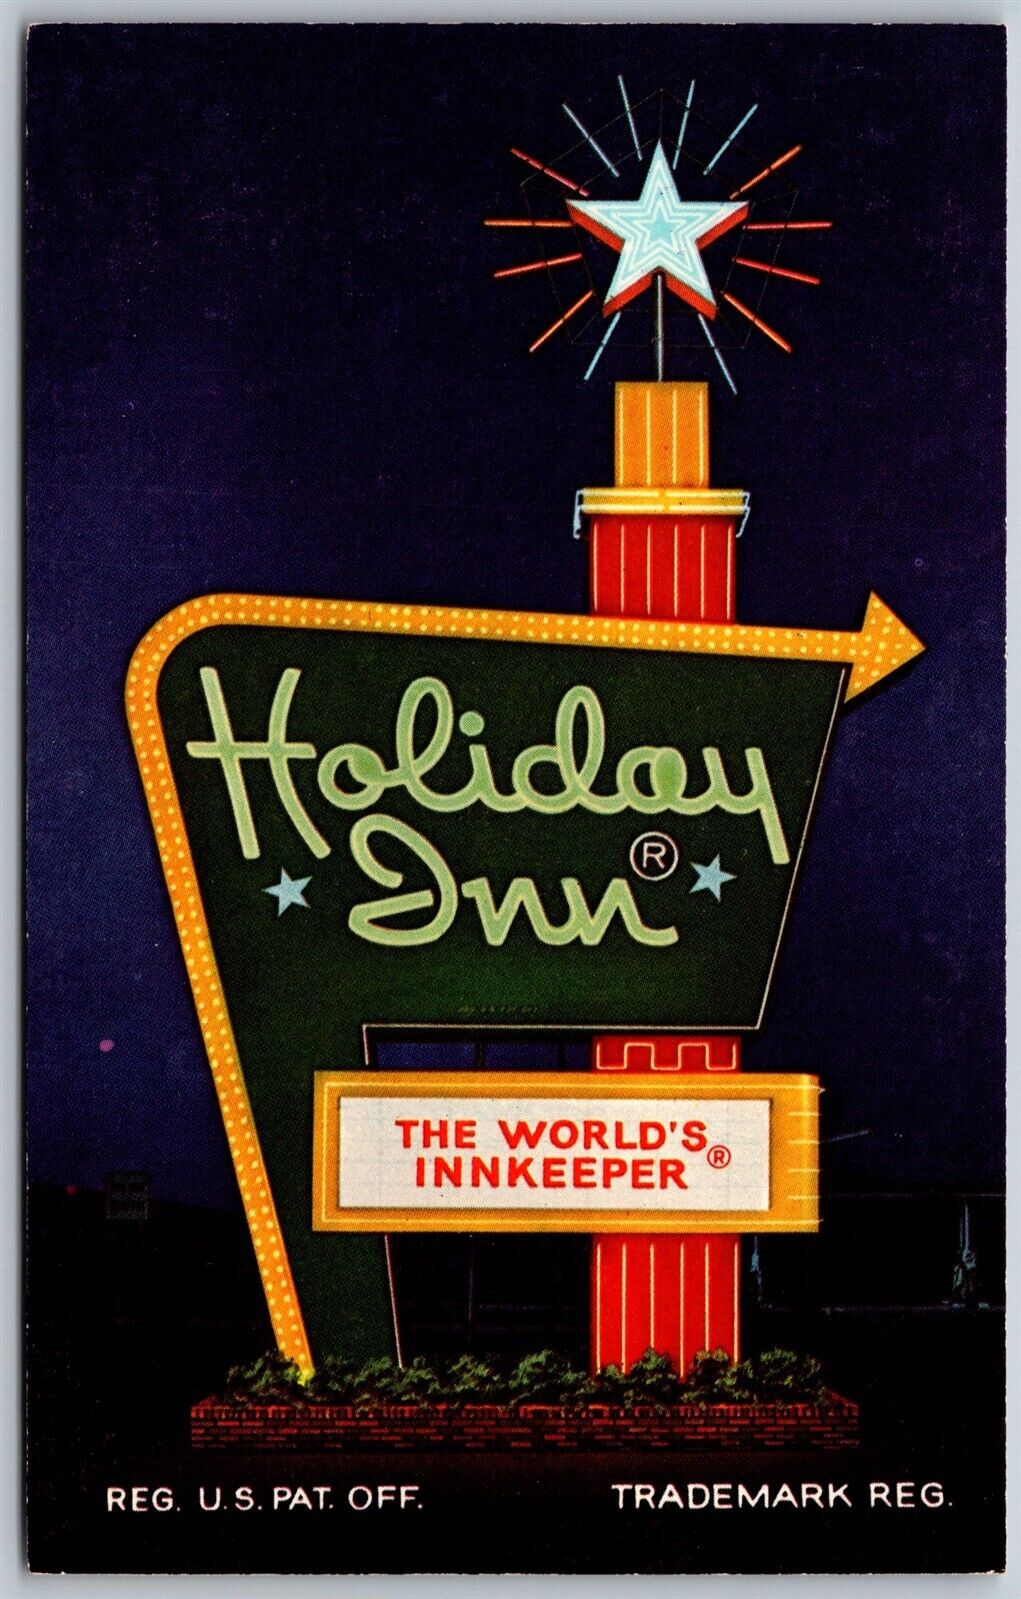 Vtg Seymour Indiana IN Holiday Inn Hotel Motel 1950s Postcard